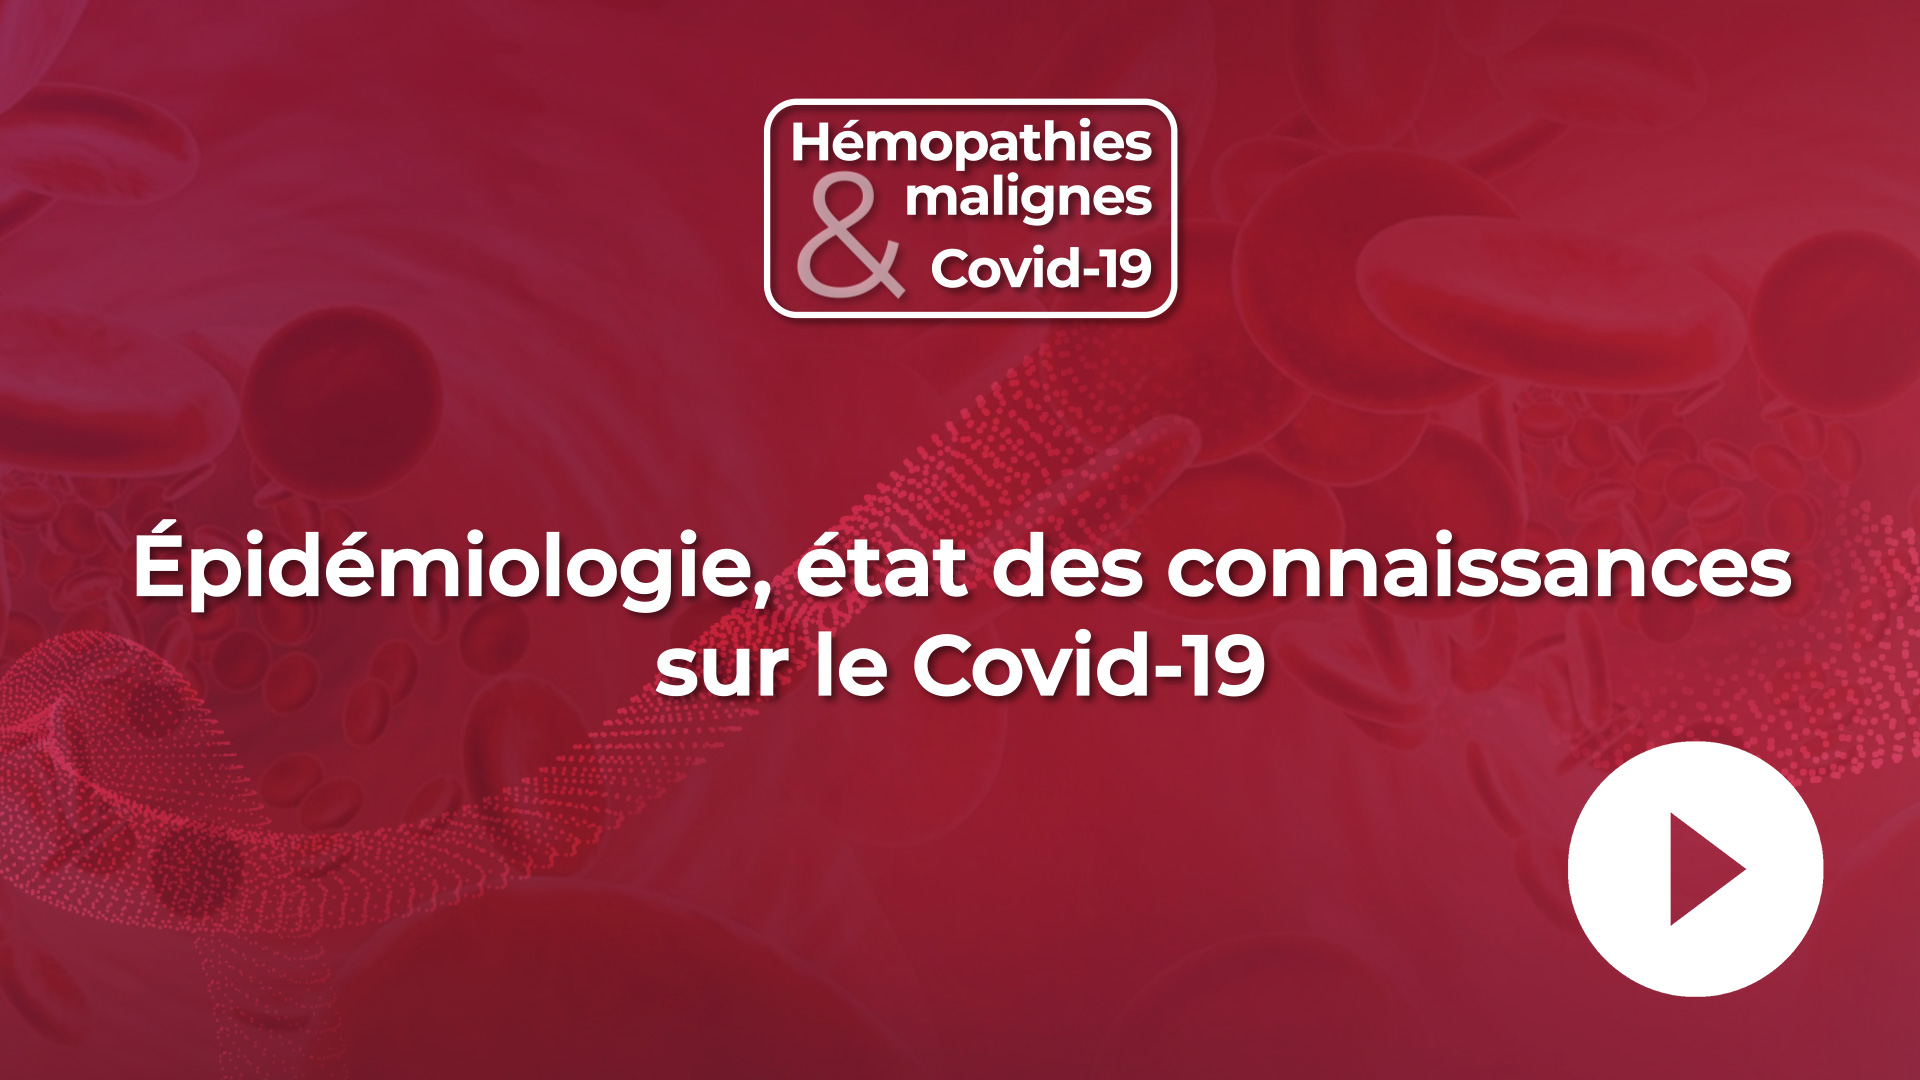 TKH_module_01_Hemopathies_malignes_et_Covid-19